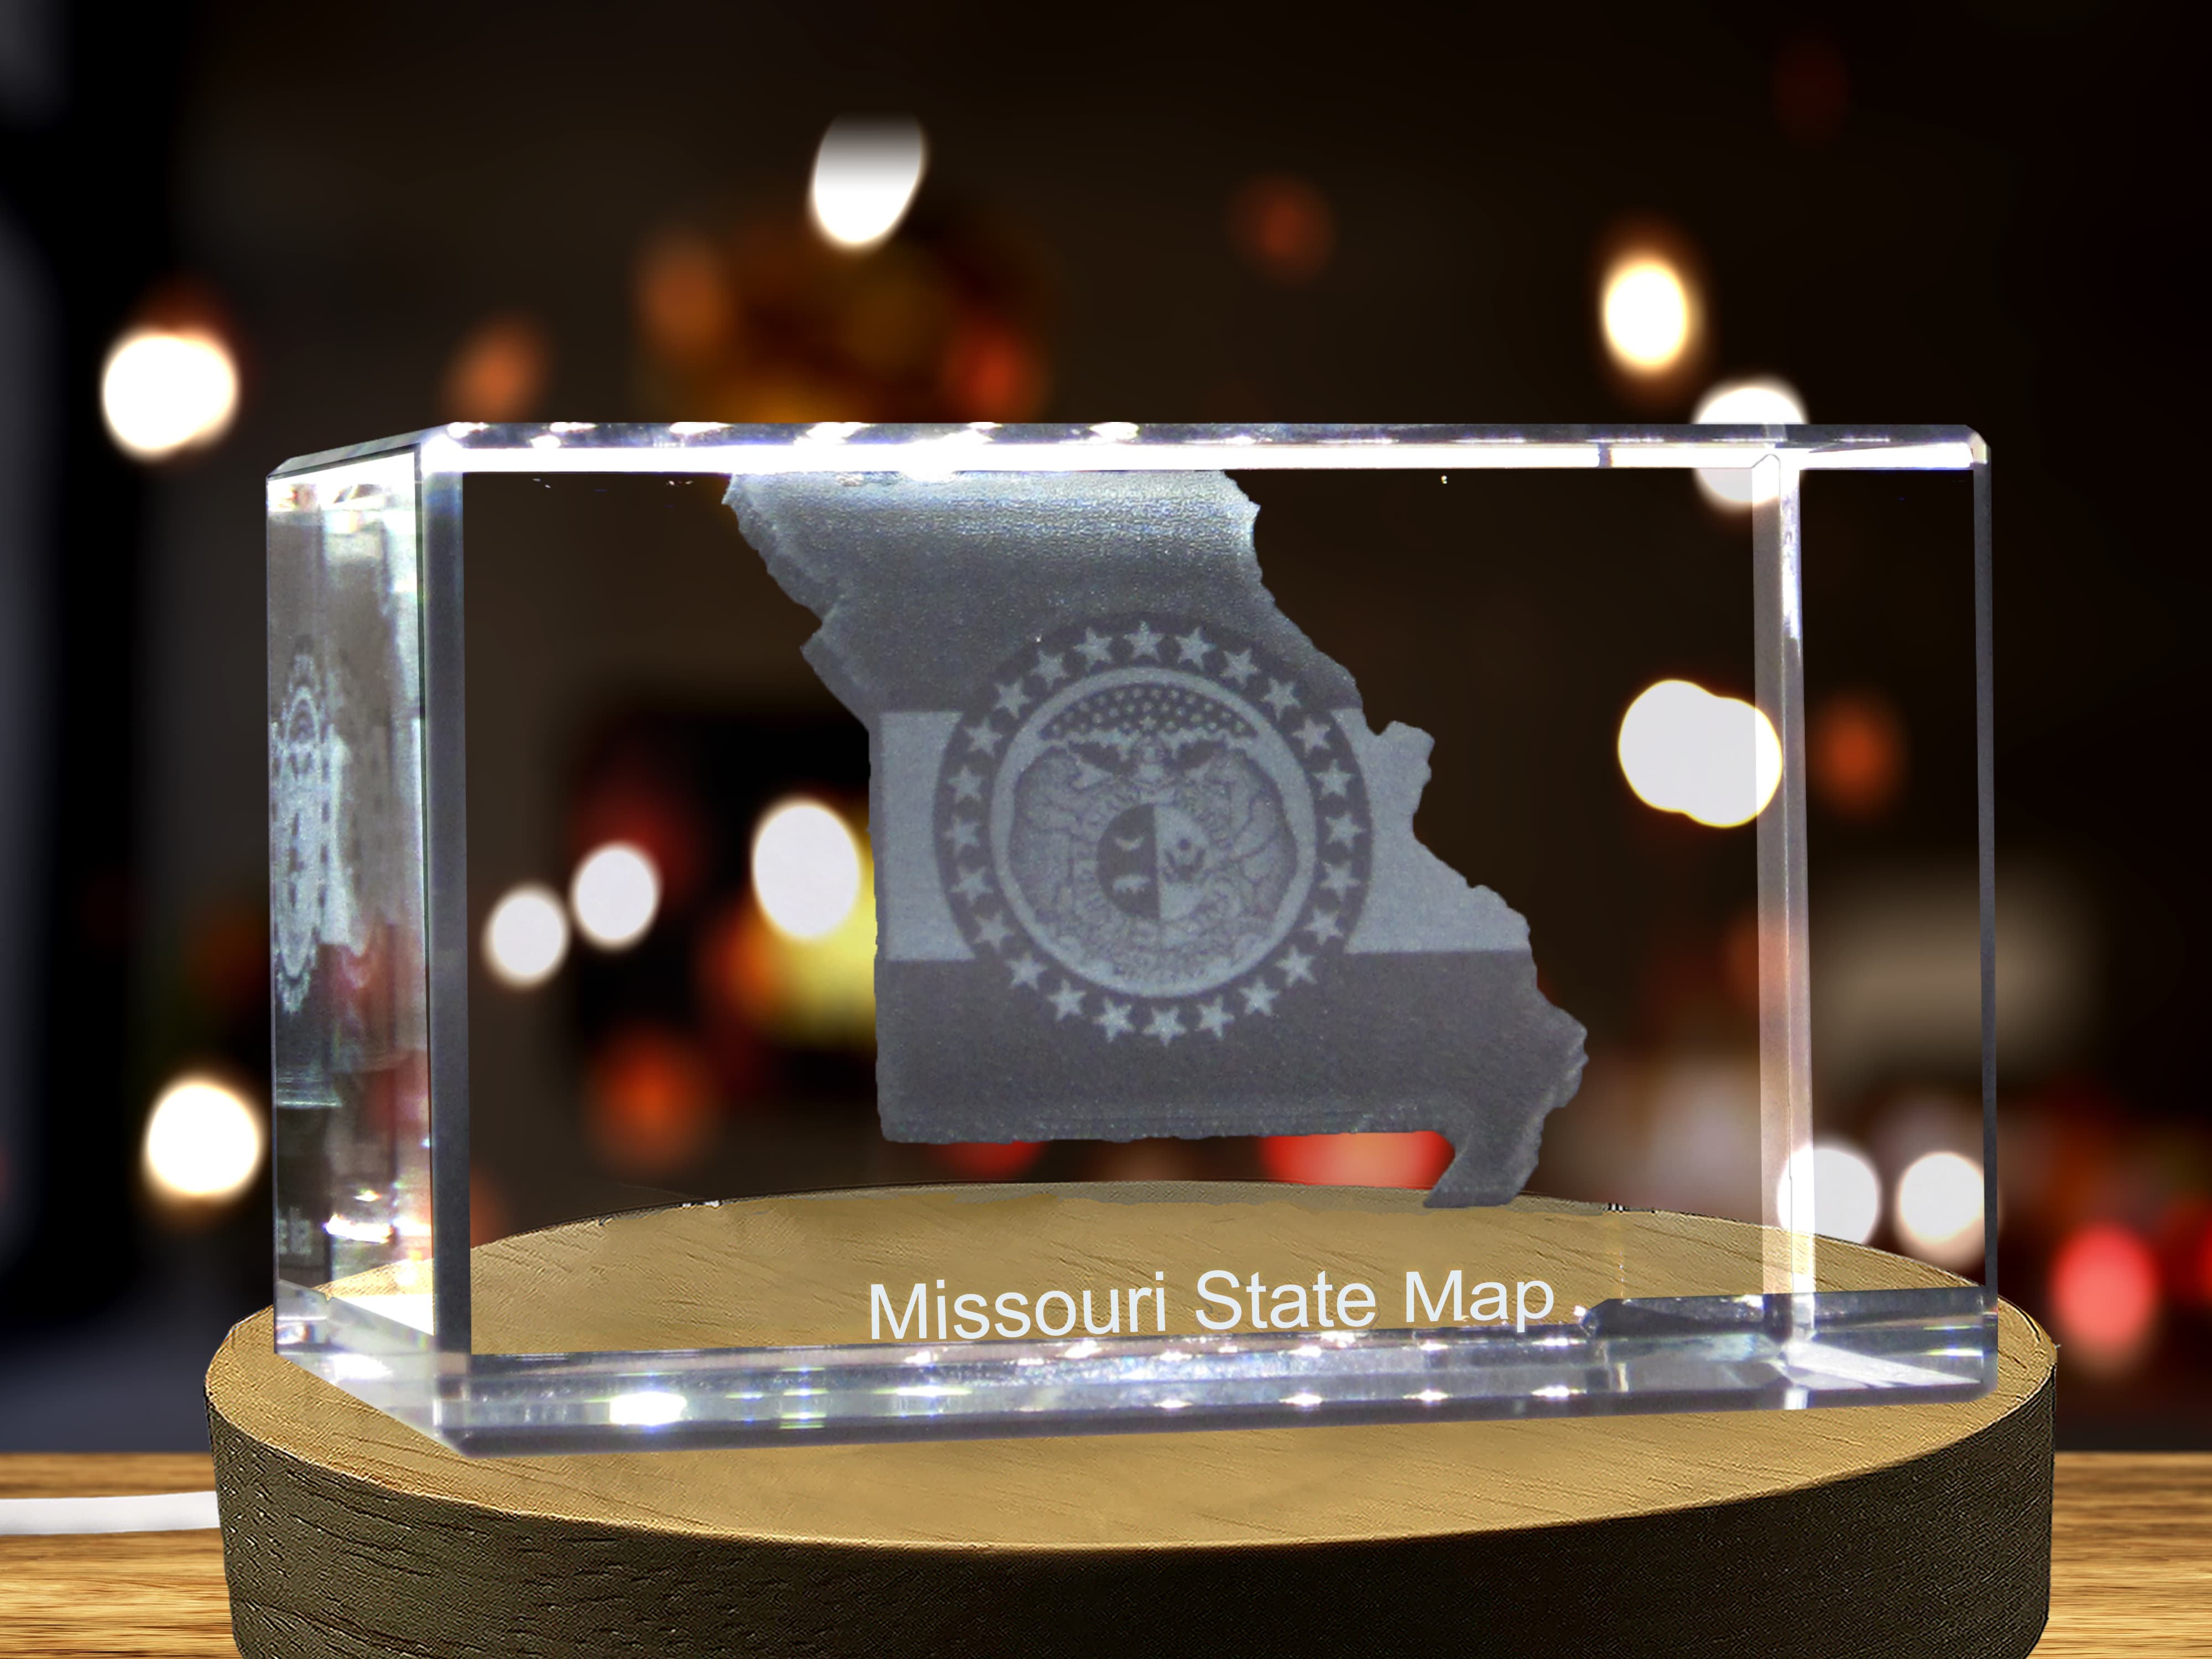 Missouri 3D Engraved Crystal 3D Engraved Crystal Keepsake/Gift/Decor/Collectible/Souvenir A&B Crystal Collection